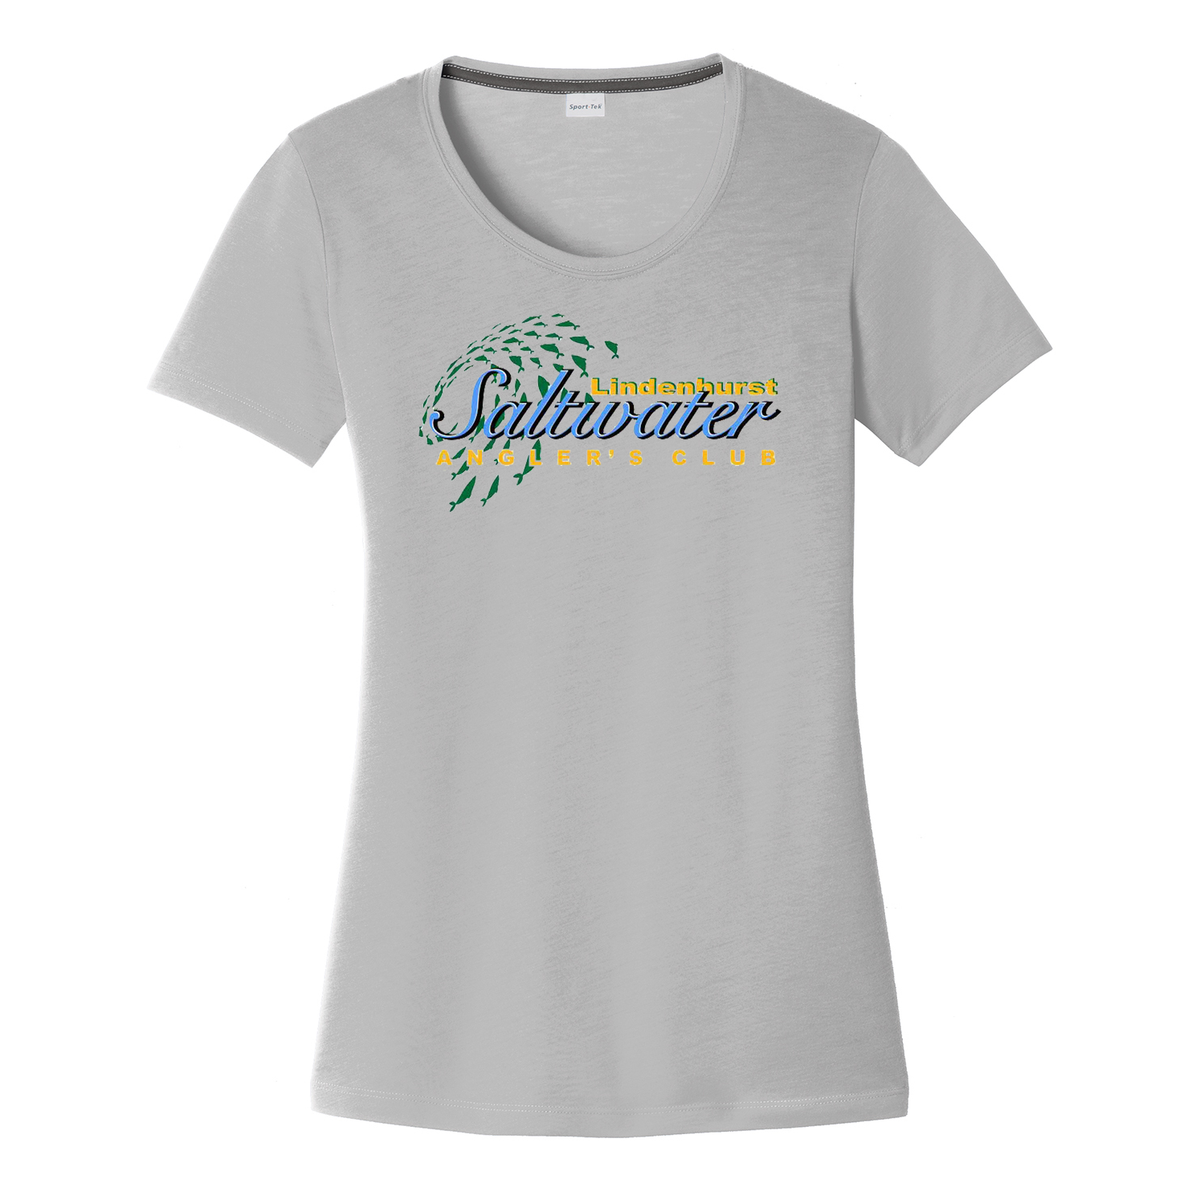 Lindenhurt Anglers Women's CottonTouch Performance T-Shirt